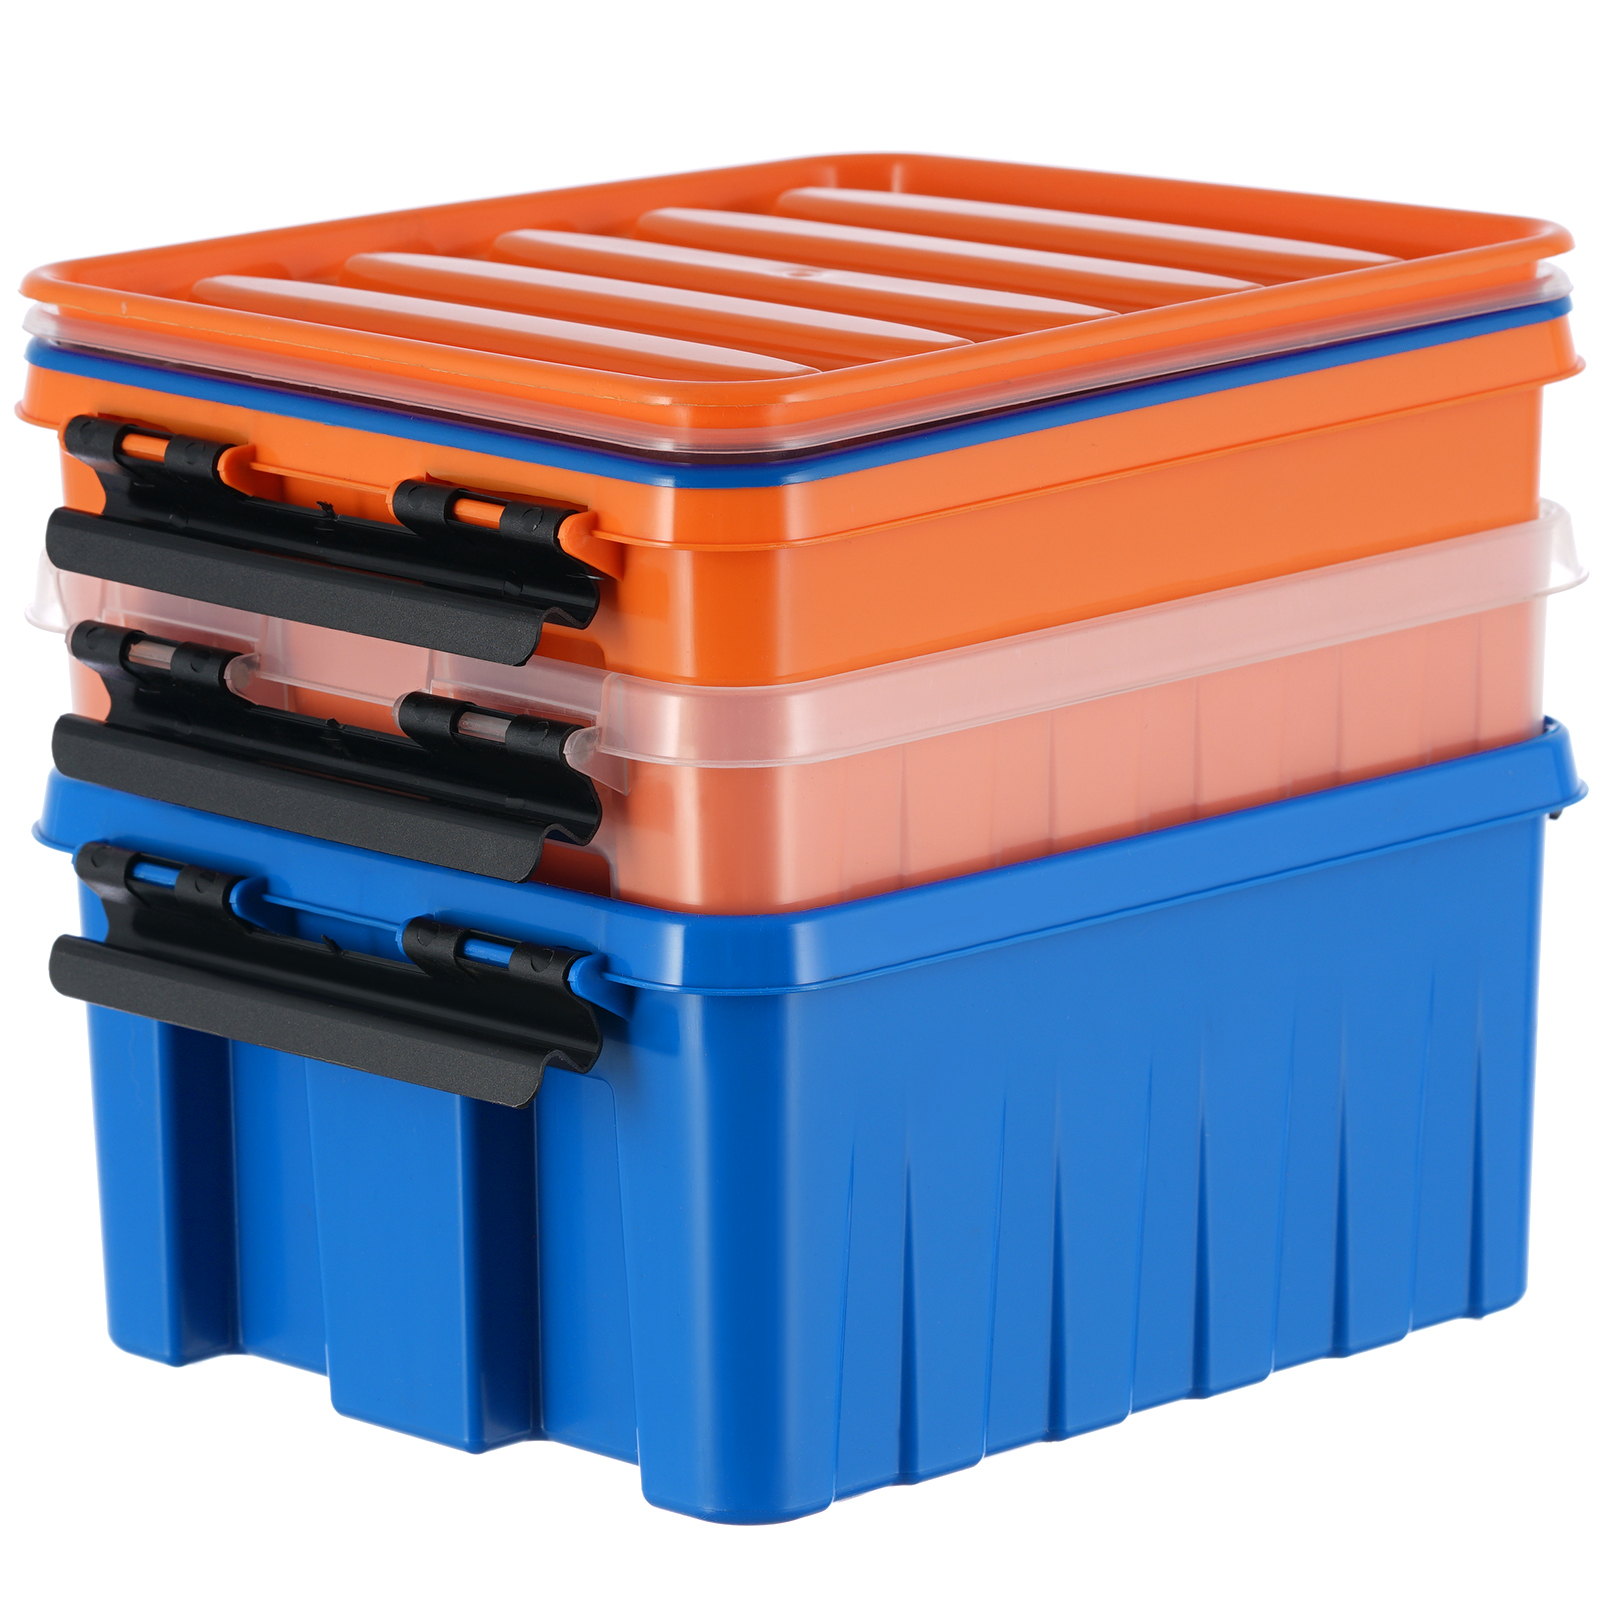 Rox box 120. Контейнер ROXBOX 2.5 Л. Rox Box контейнеры. Контейнер пластиковый ROXBOX. Контейнер с крышкой Rox Box 2,5 л..